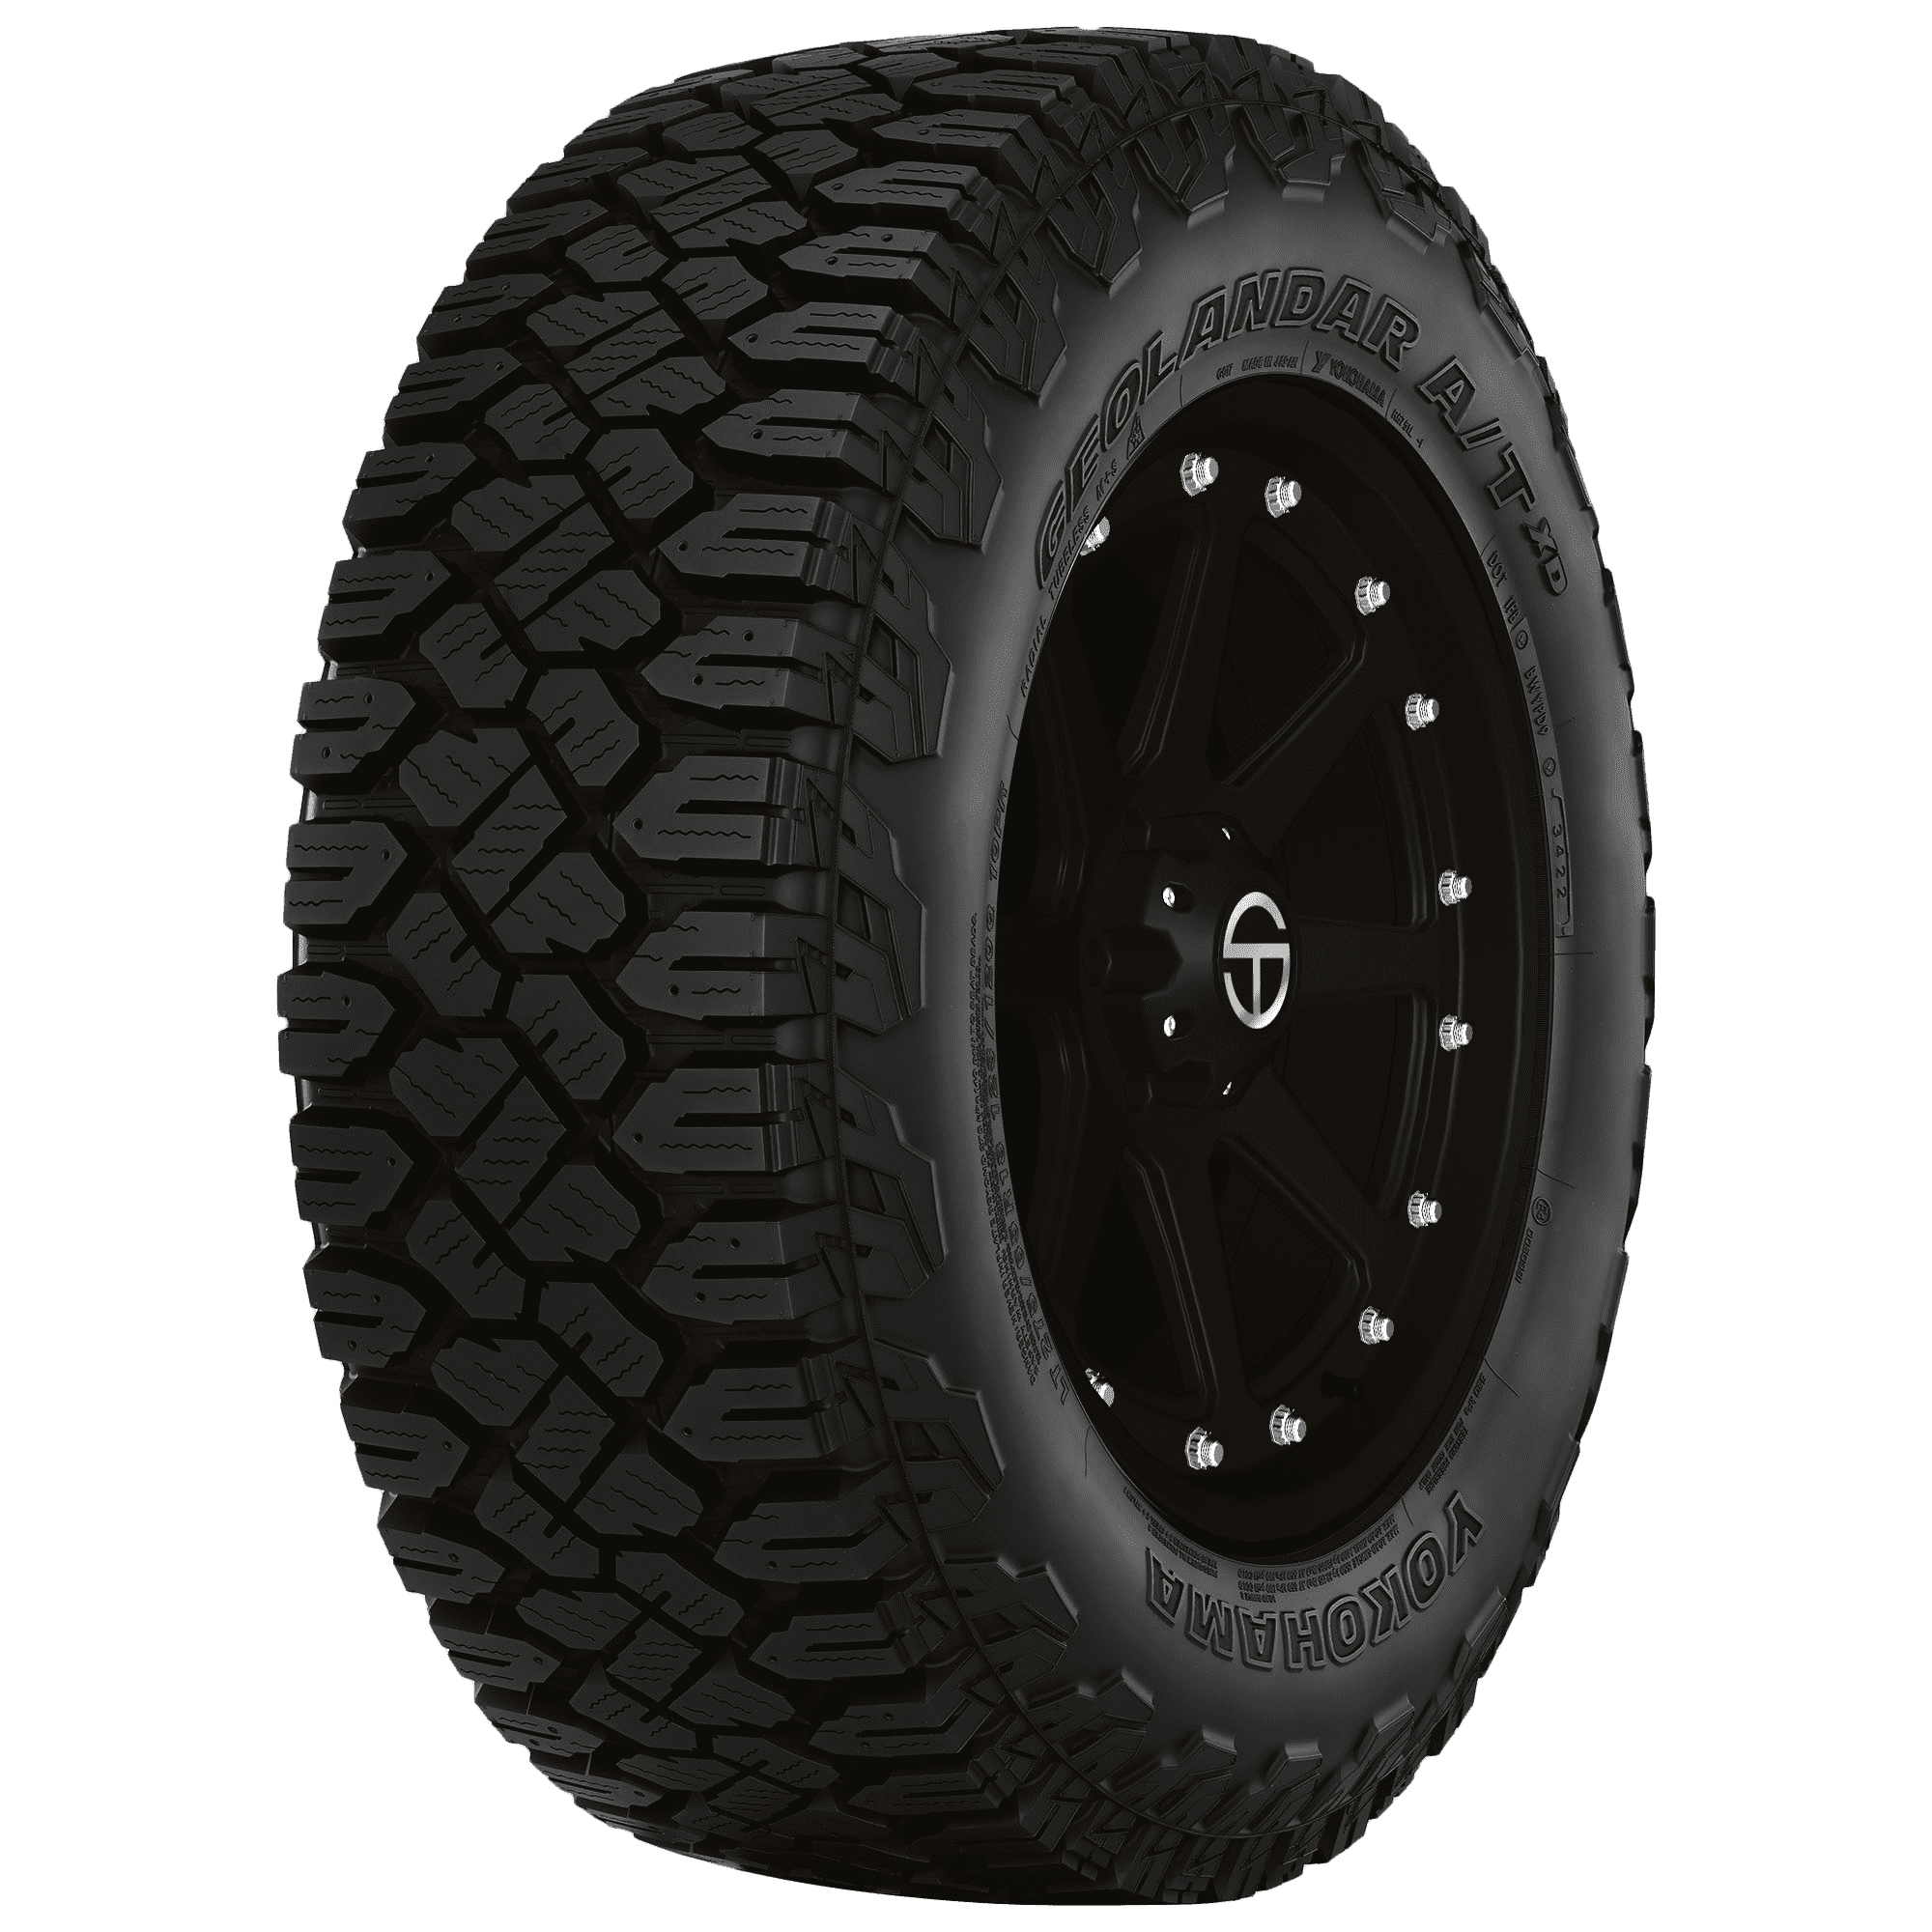 Buy Yokohama Geolandar A/T XD Tires Online | SimpleTire